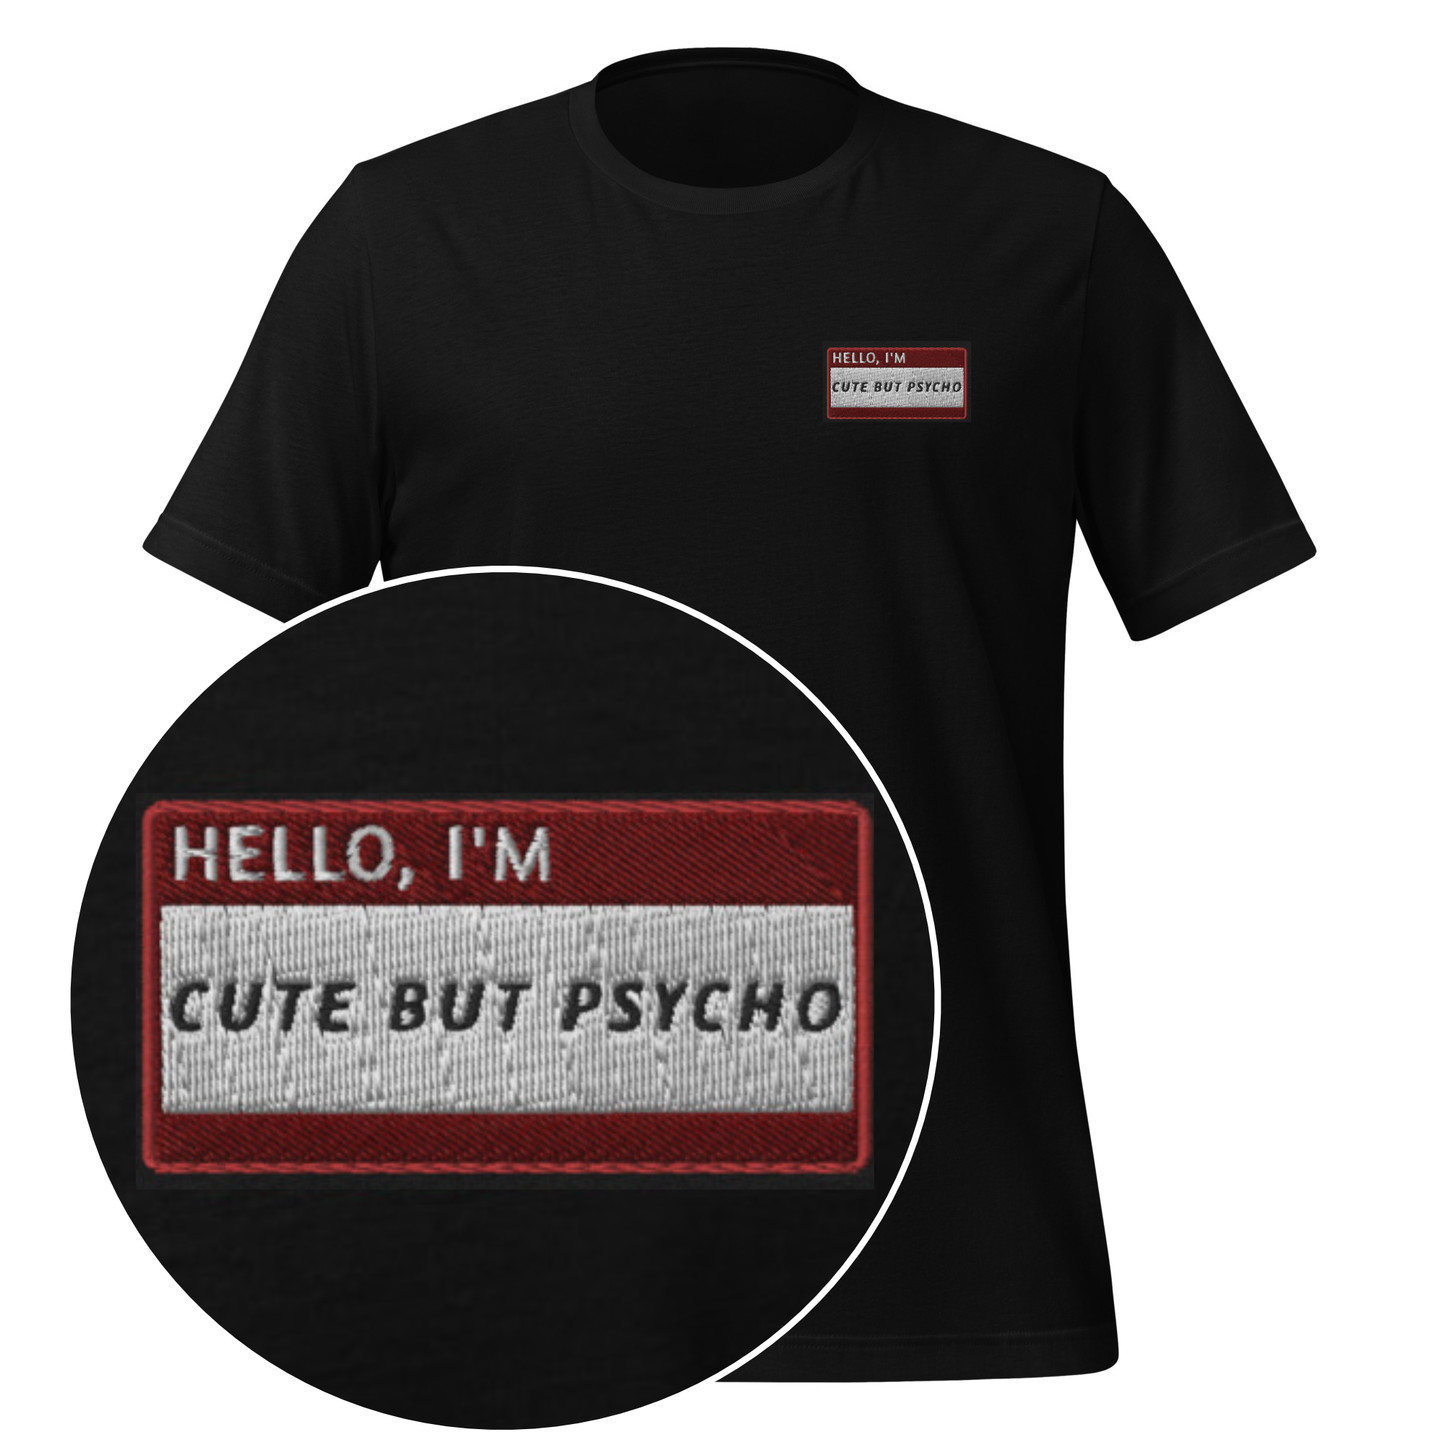 HELLO I'M CUTE BUT PSYCHO - Name Tag T-Shirt